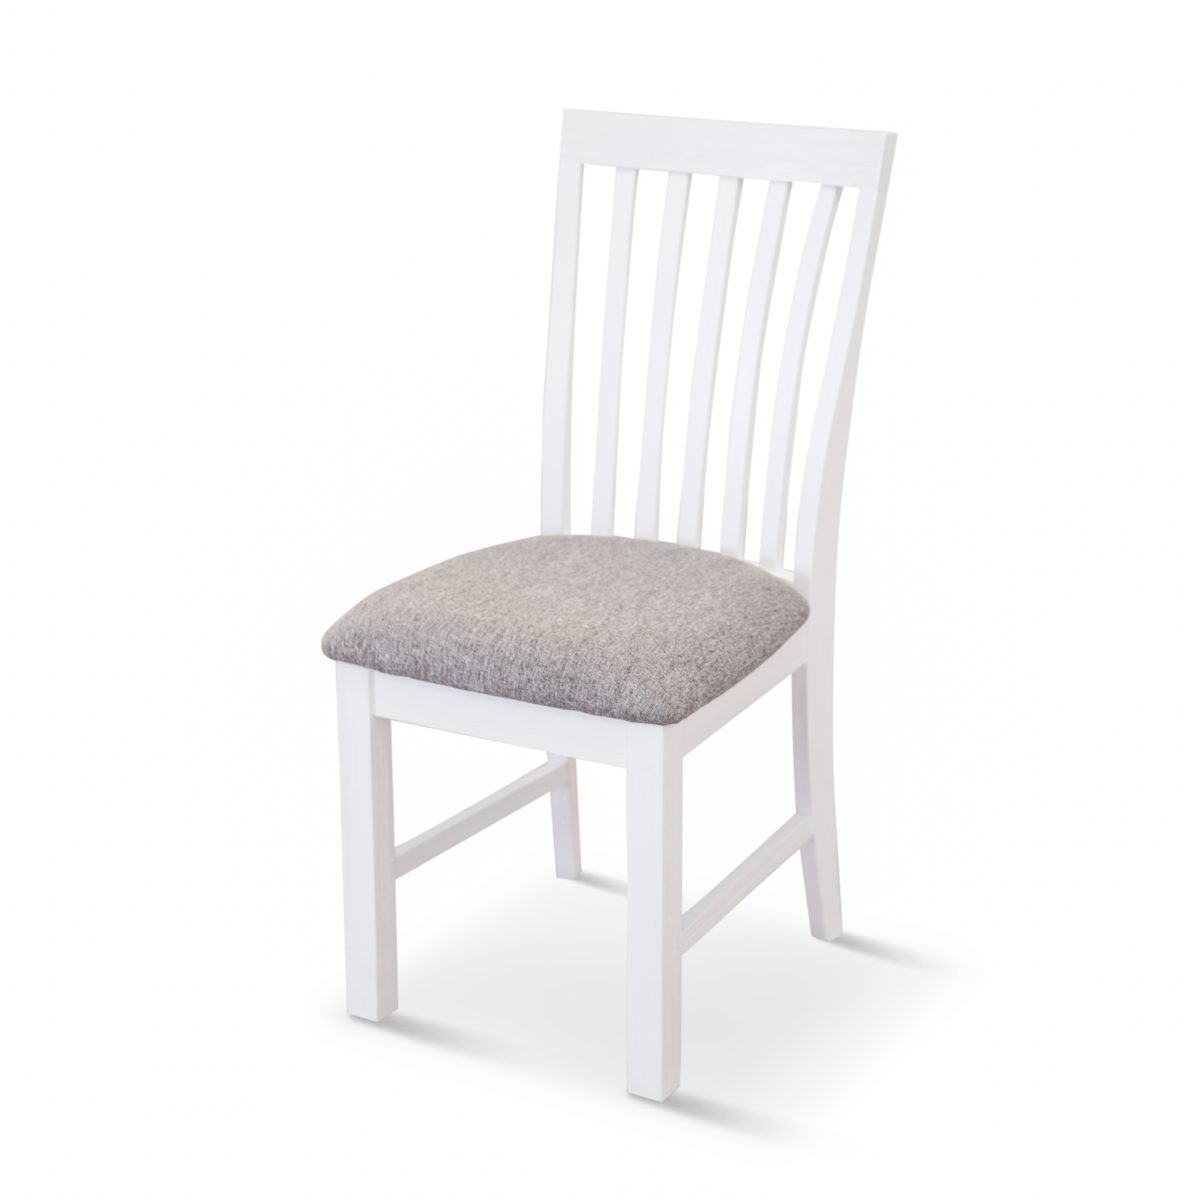 Laelia Dining Table Chair Acacia Wood Coastal Furniture – White – 7